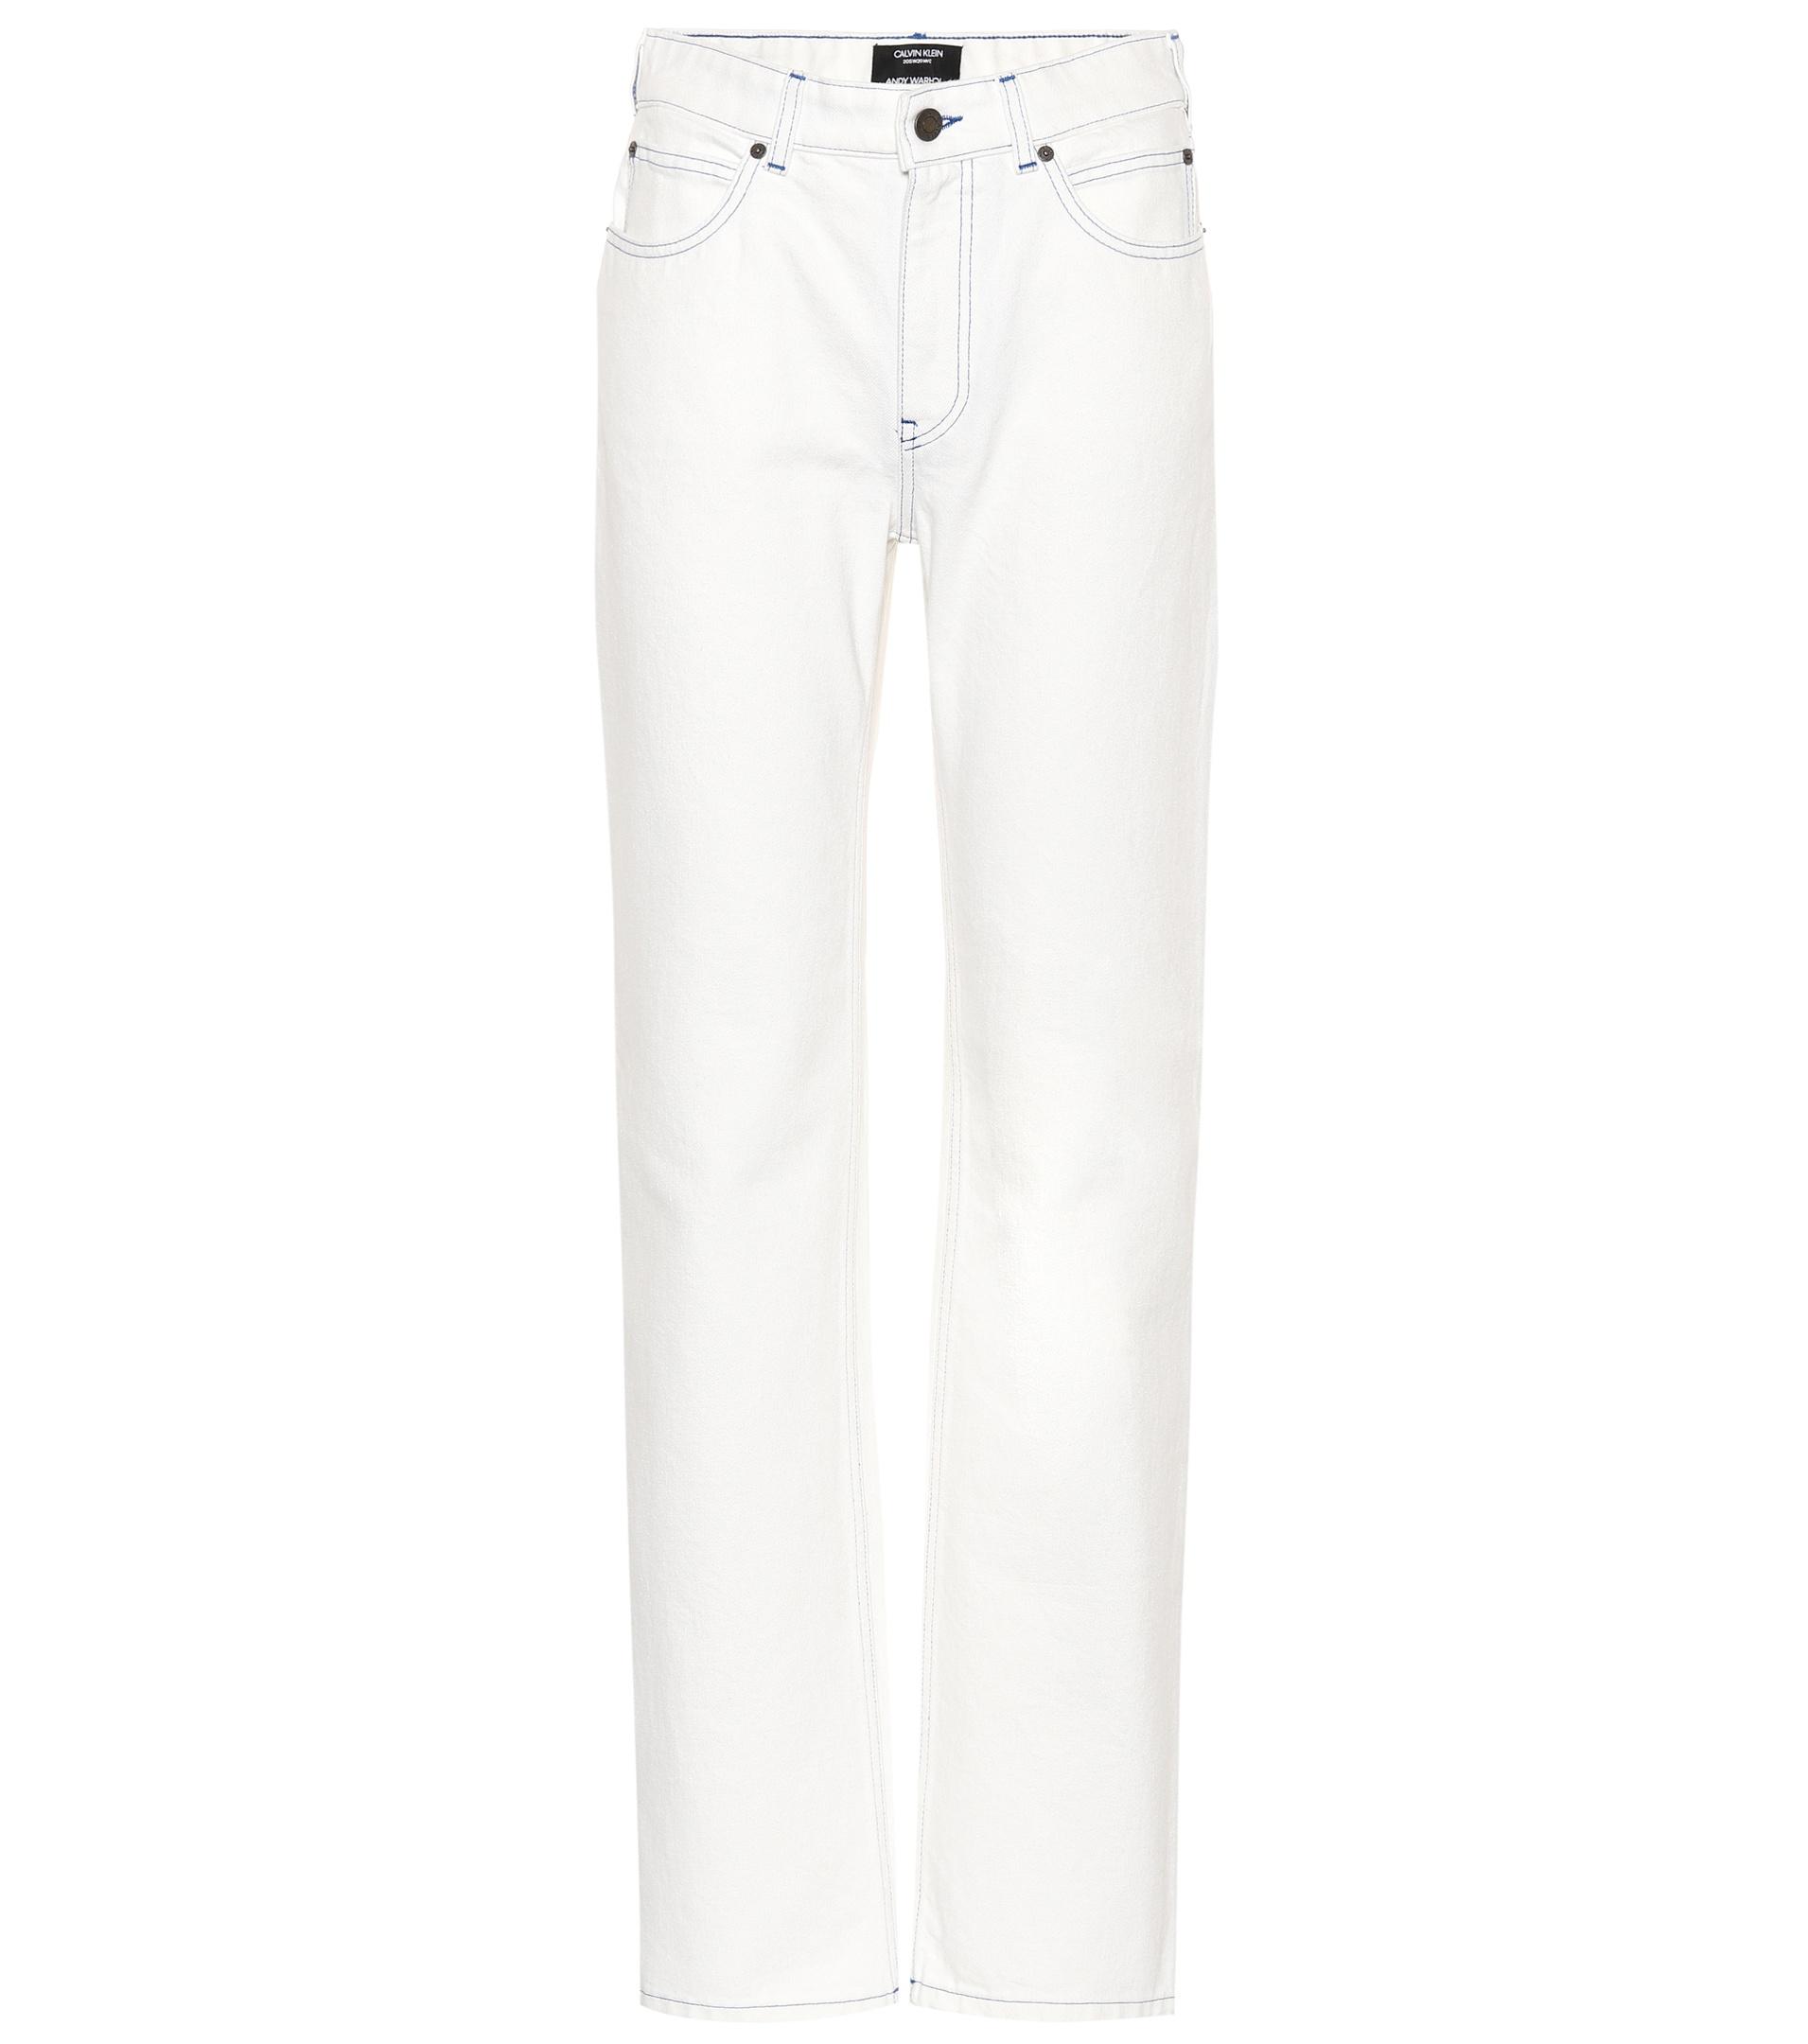 CALVIN KLEIN 205W39NYC Sandra Brant Cotton Jeans in White - Lyst